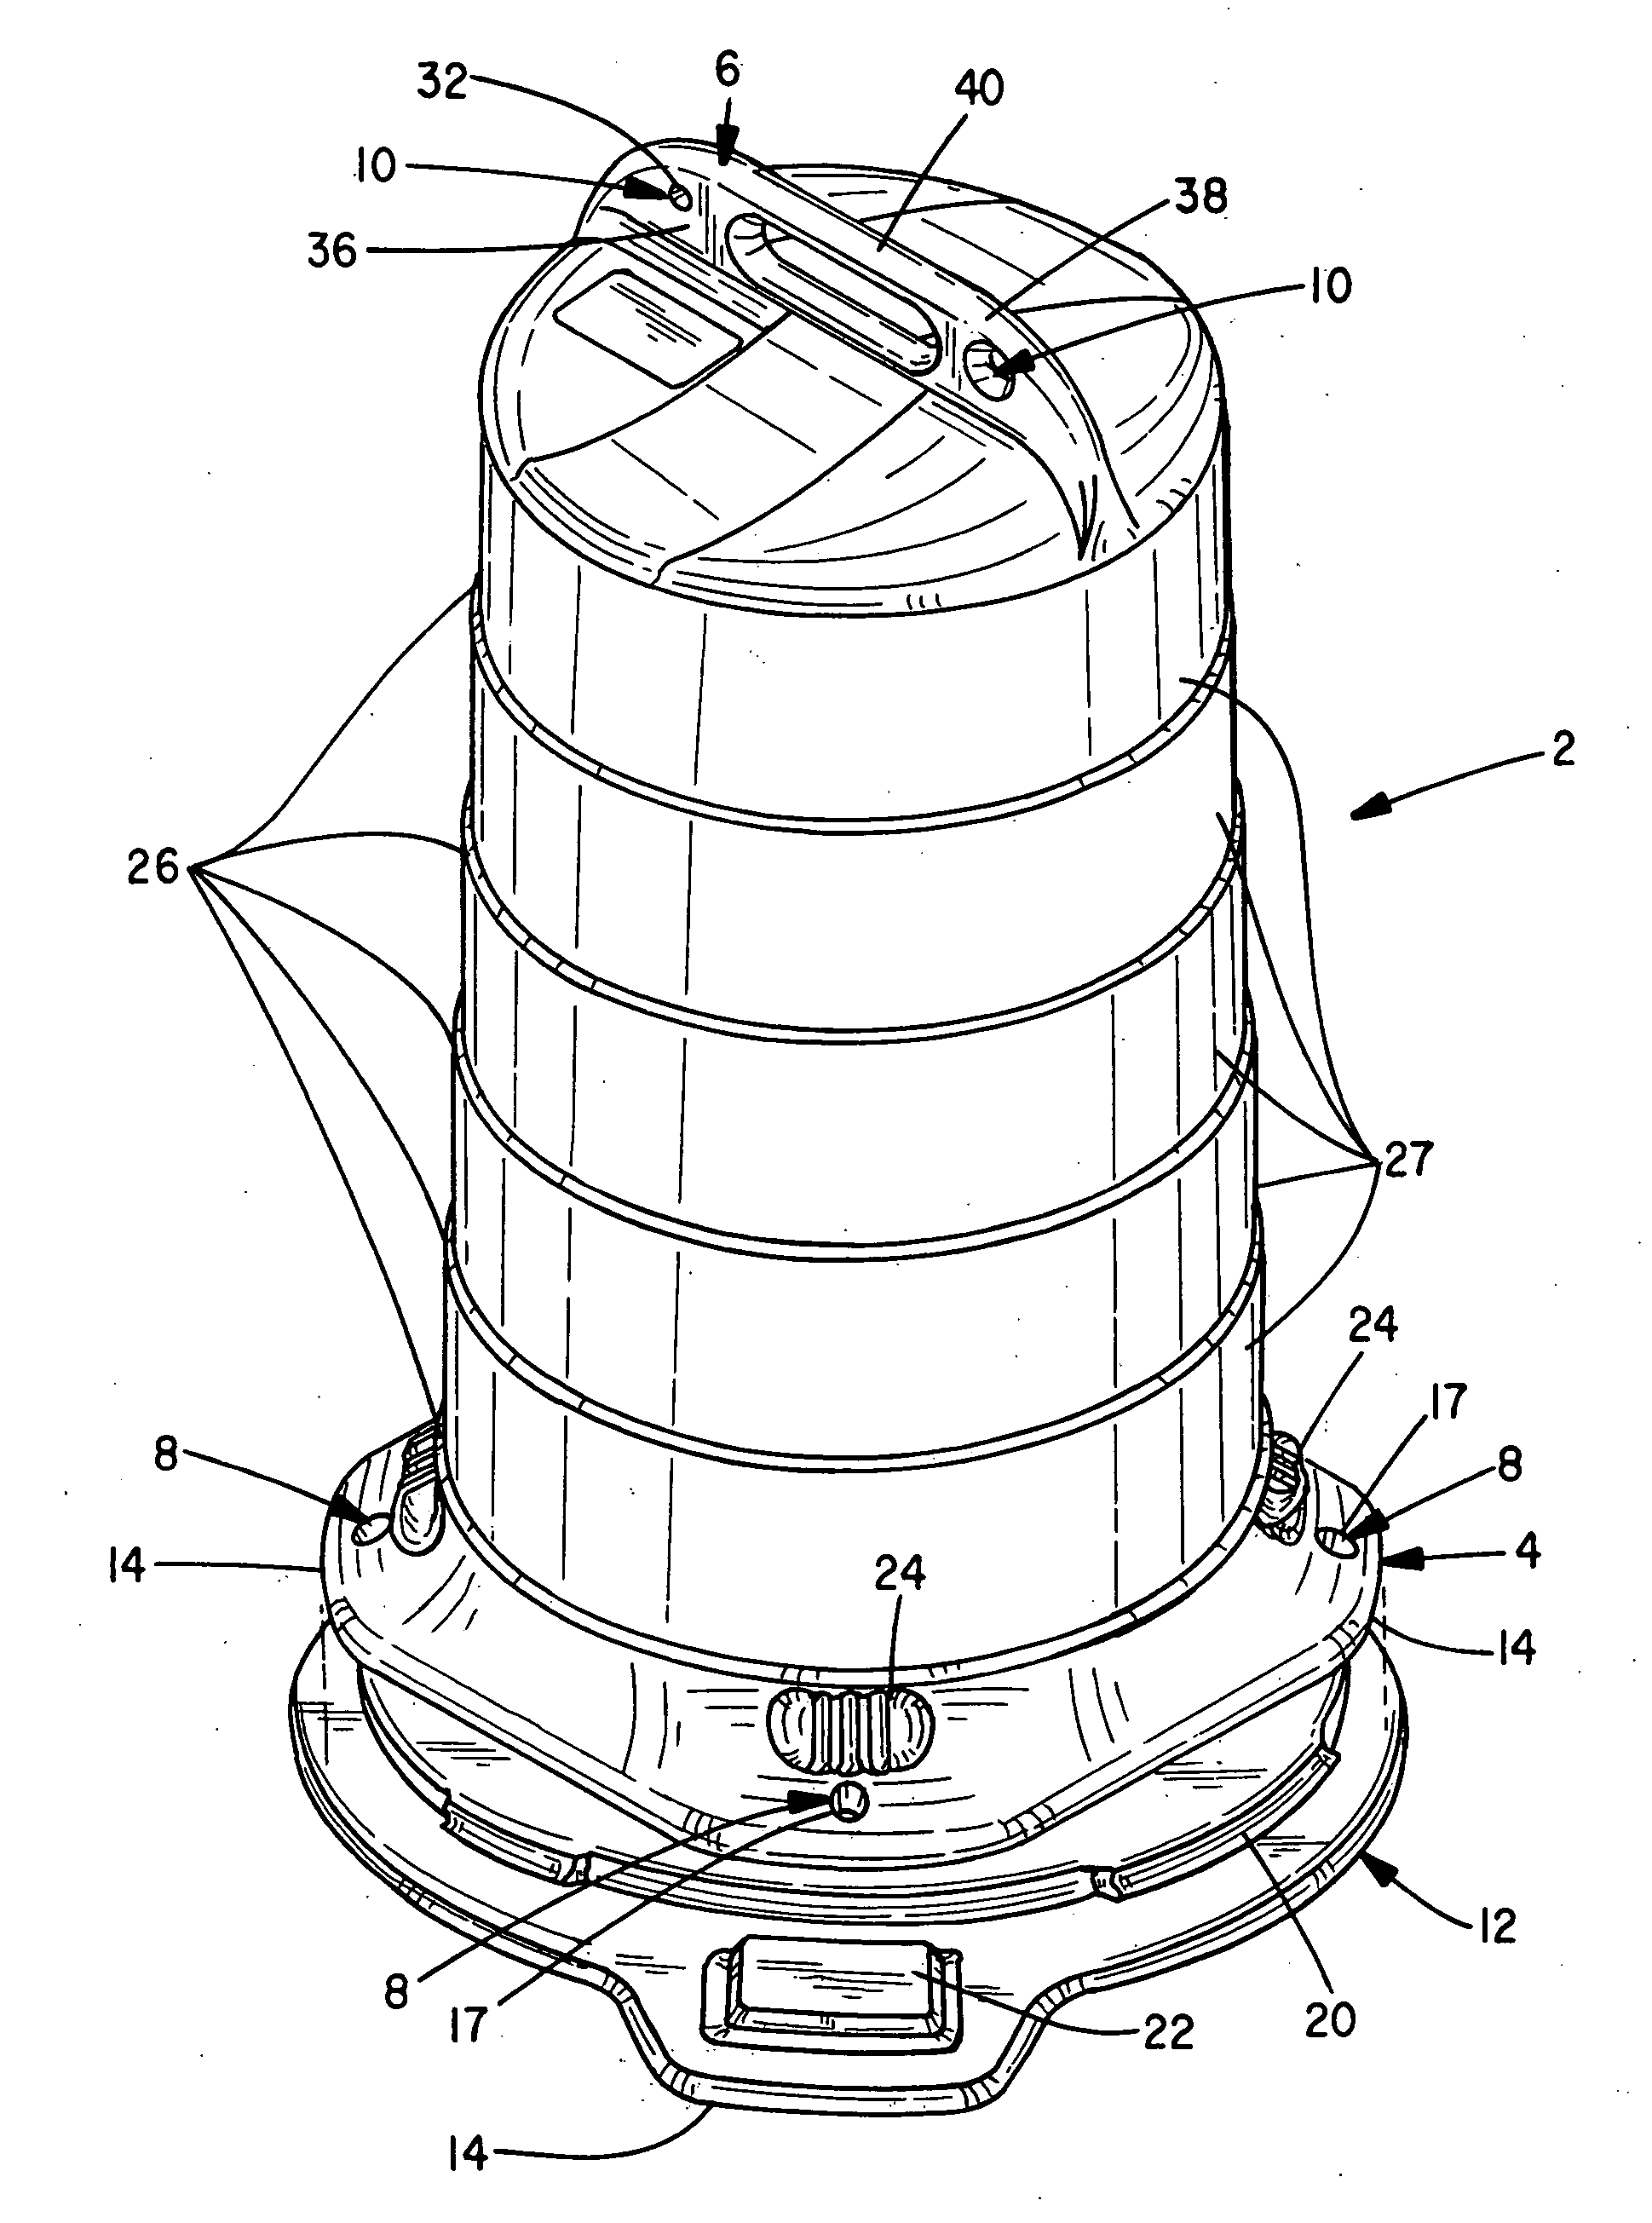 Traffic declineator barrel